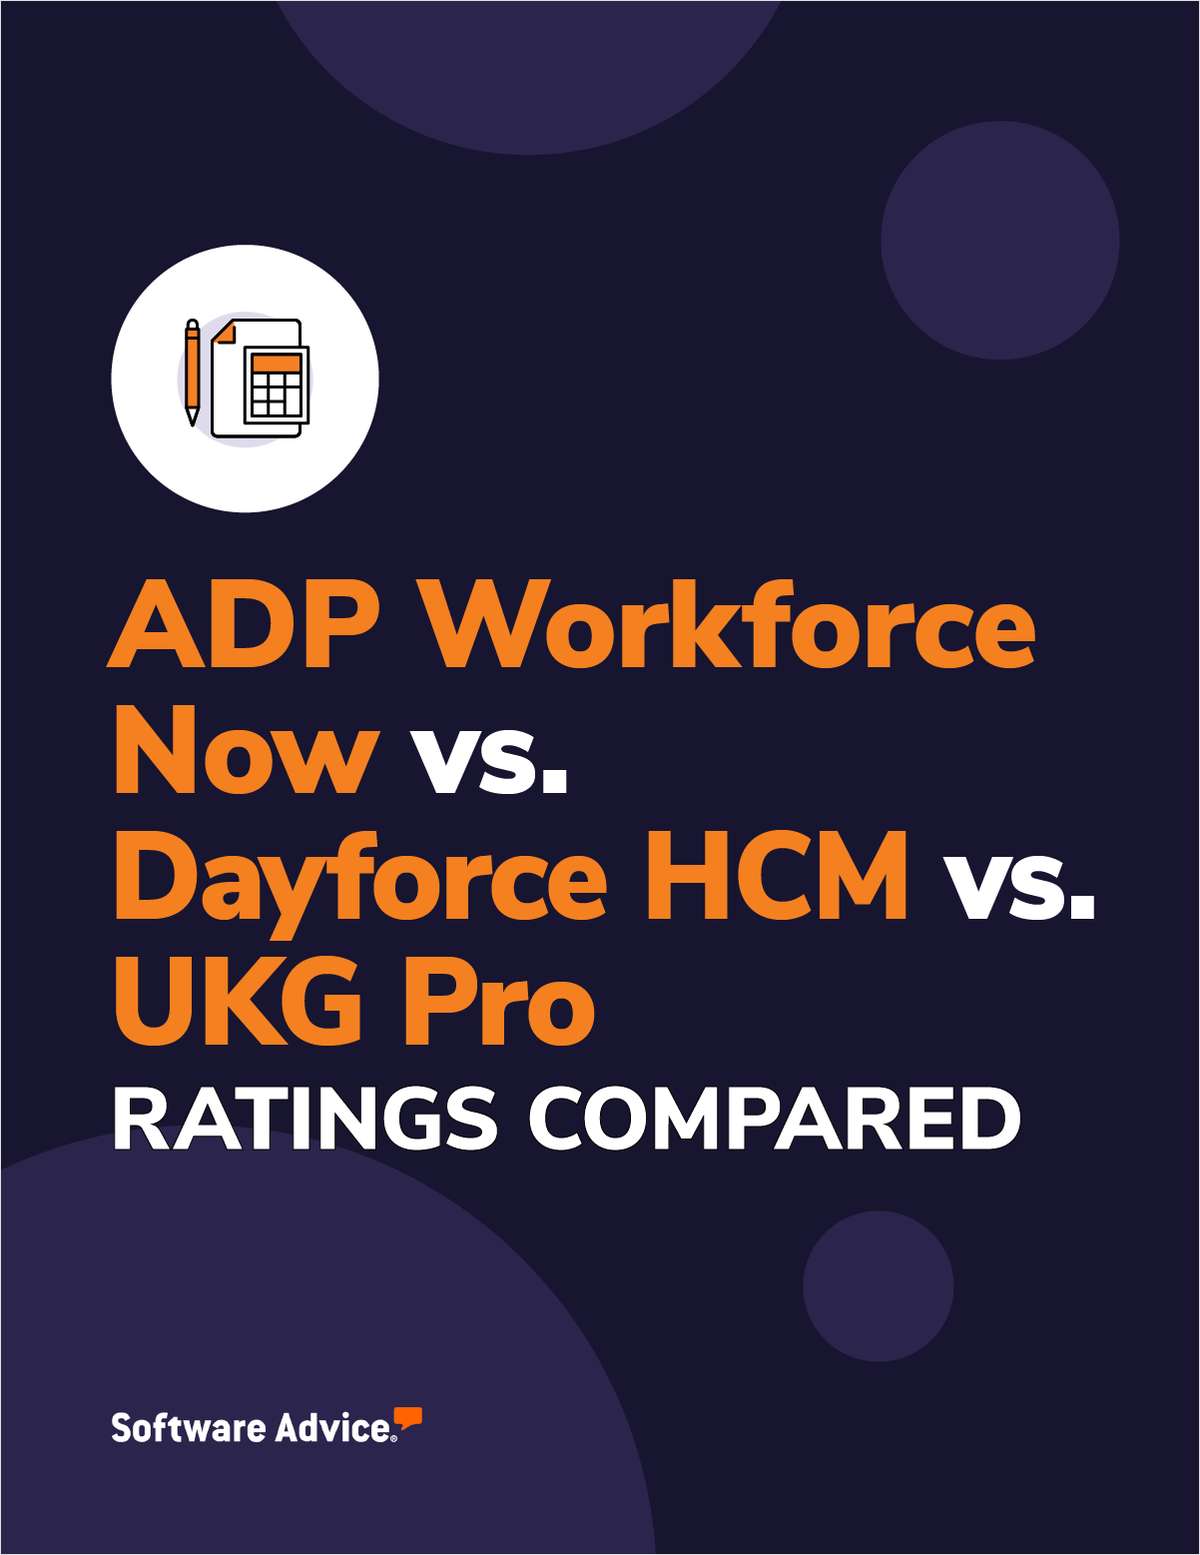 ADP Workforce Now vs. Dayforce HCM vs. UKG Pro Ratings Compared